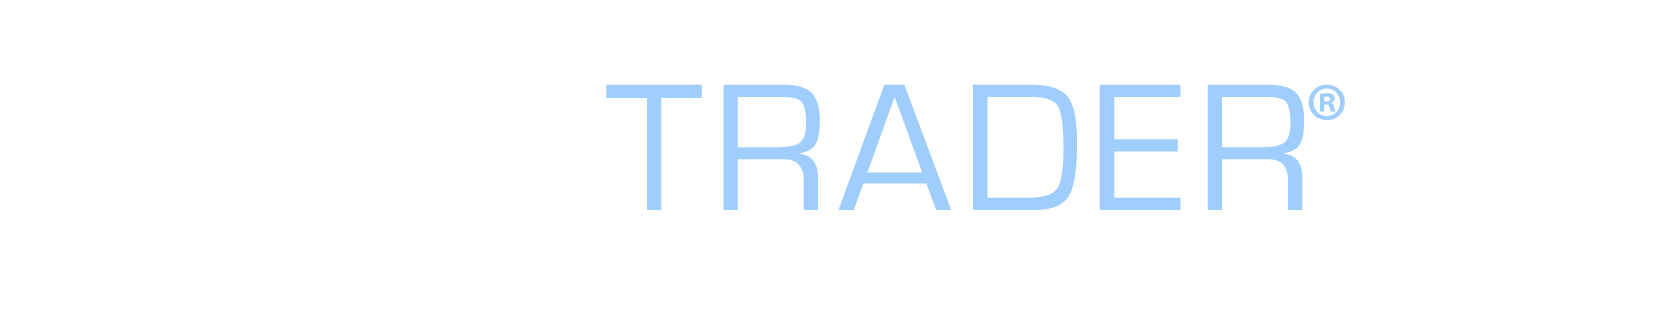 PartsTraderPartsTrader - News & Updates - The complete parts procurement marketplace.